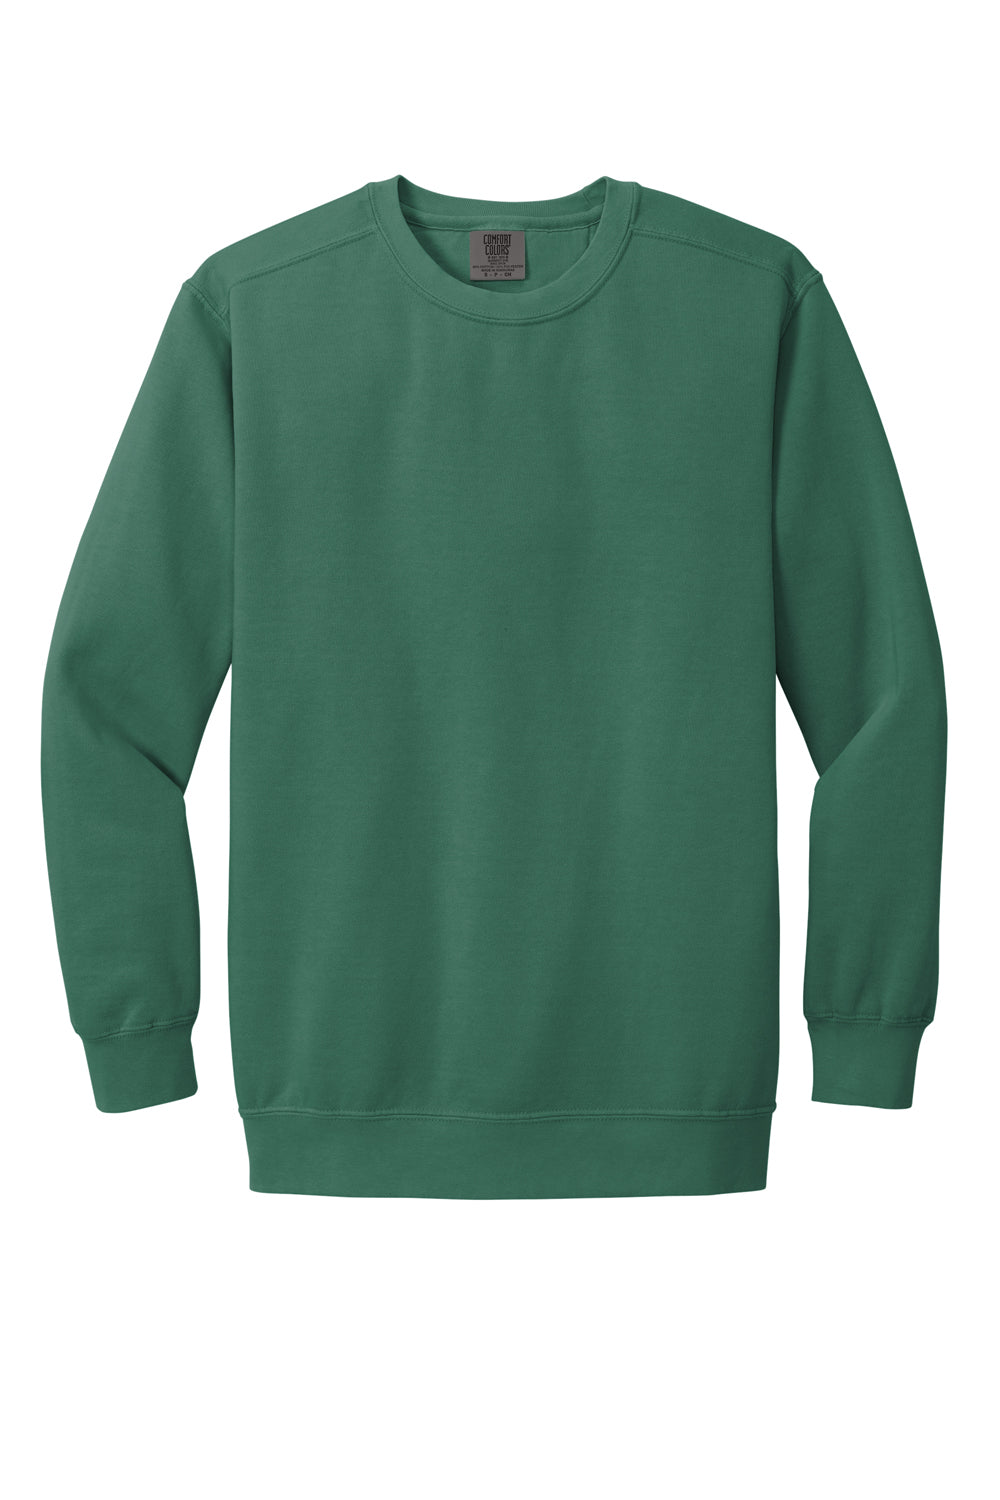 Comfort Colors 1566 Mens Crewneck Sweatshirt Light Green Flat Front